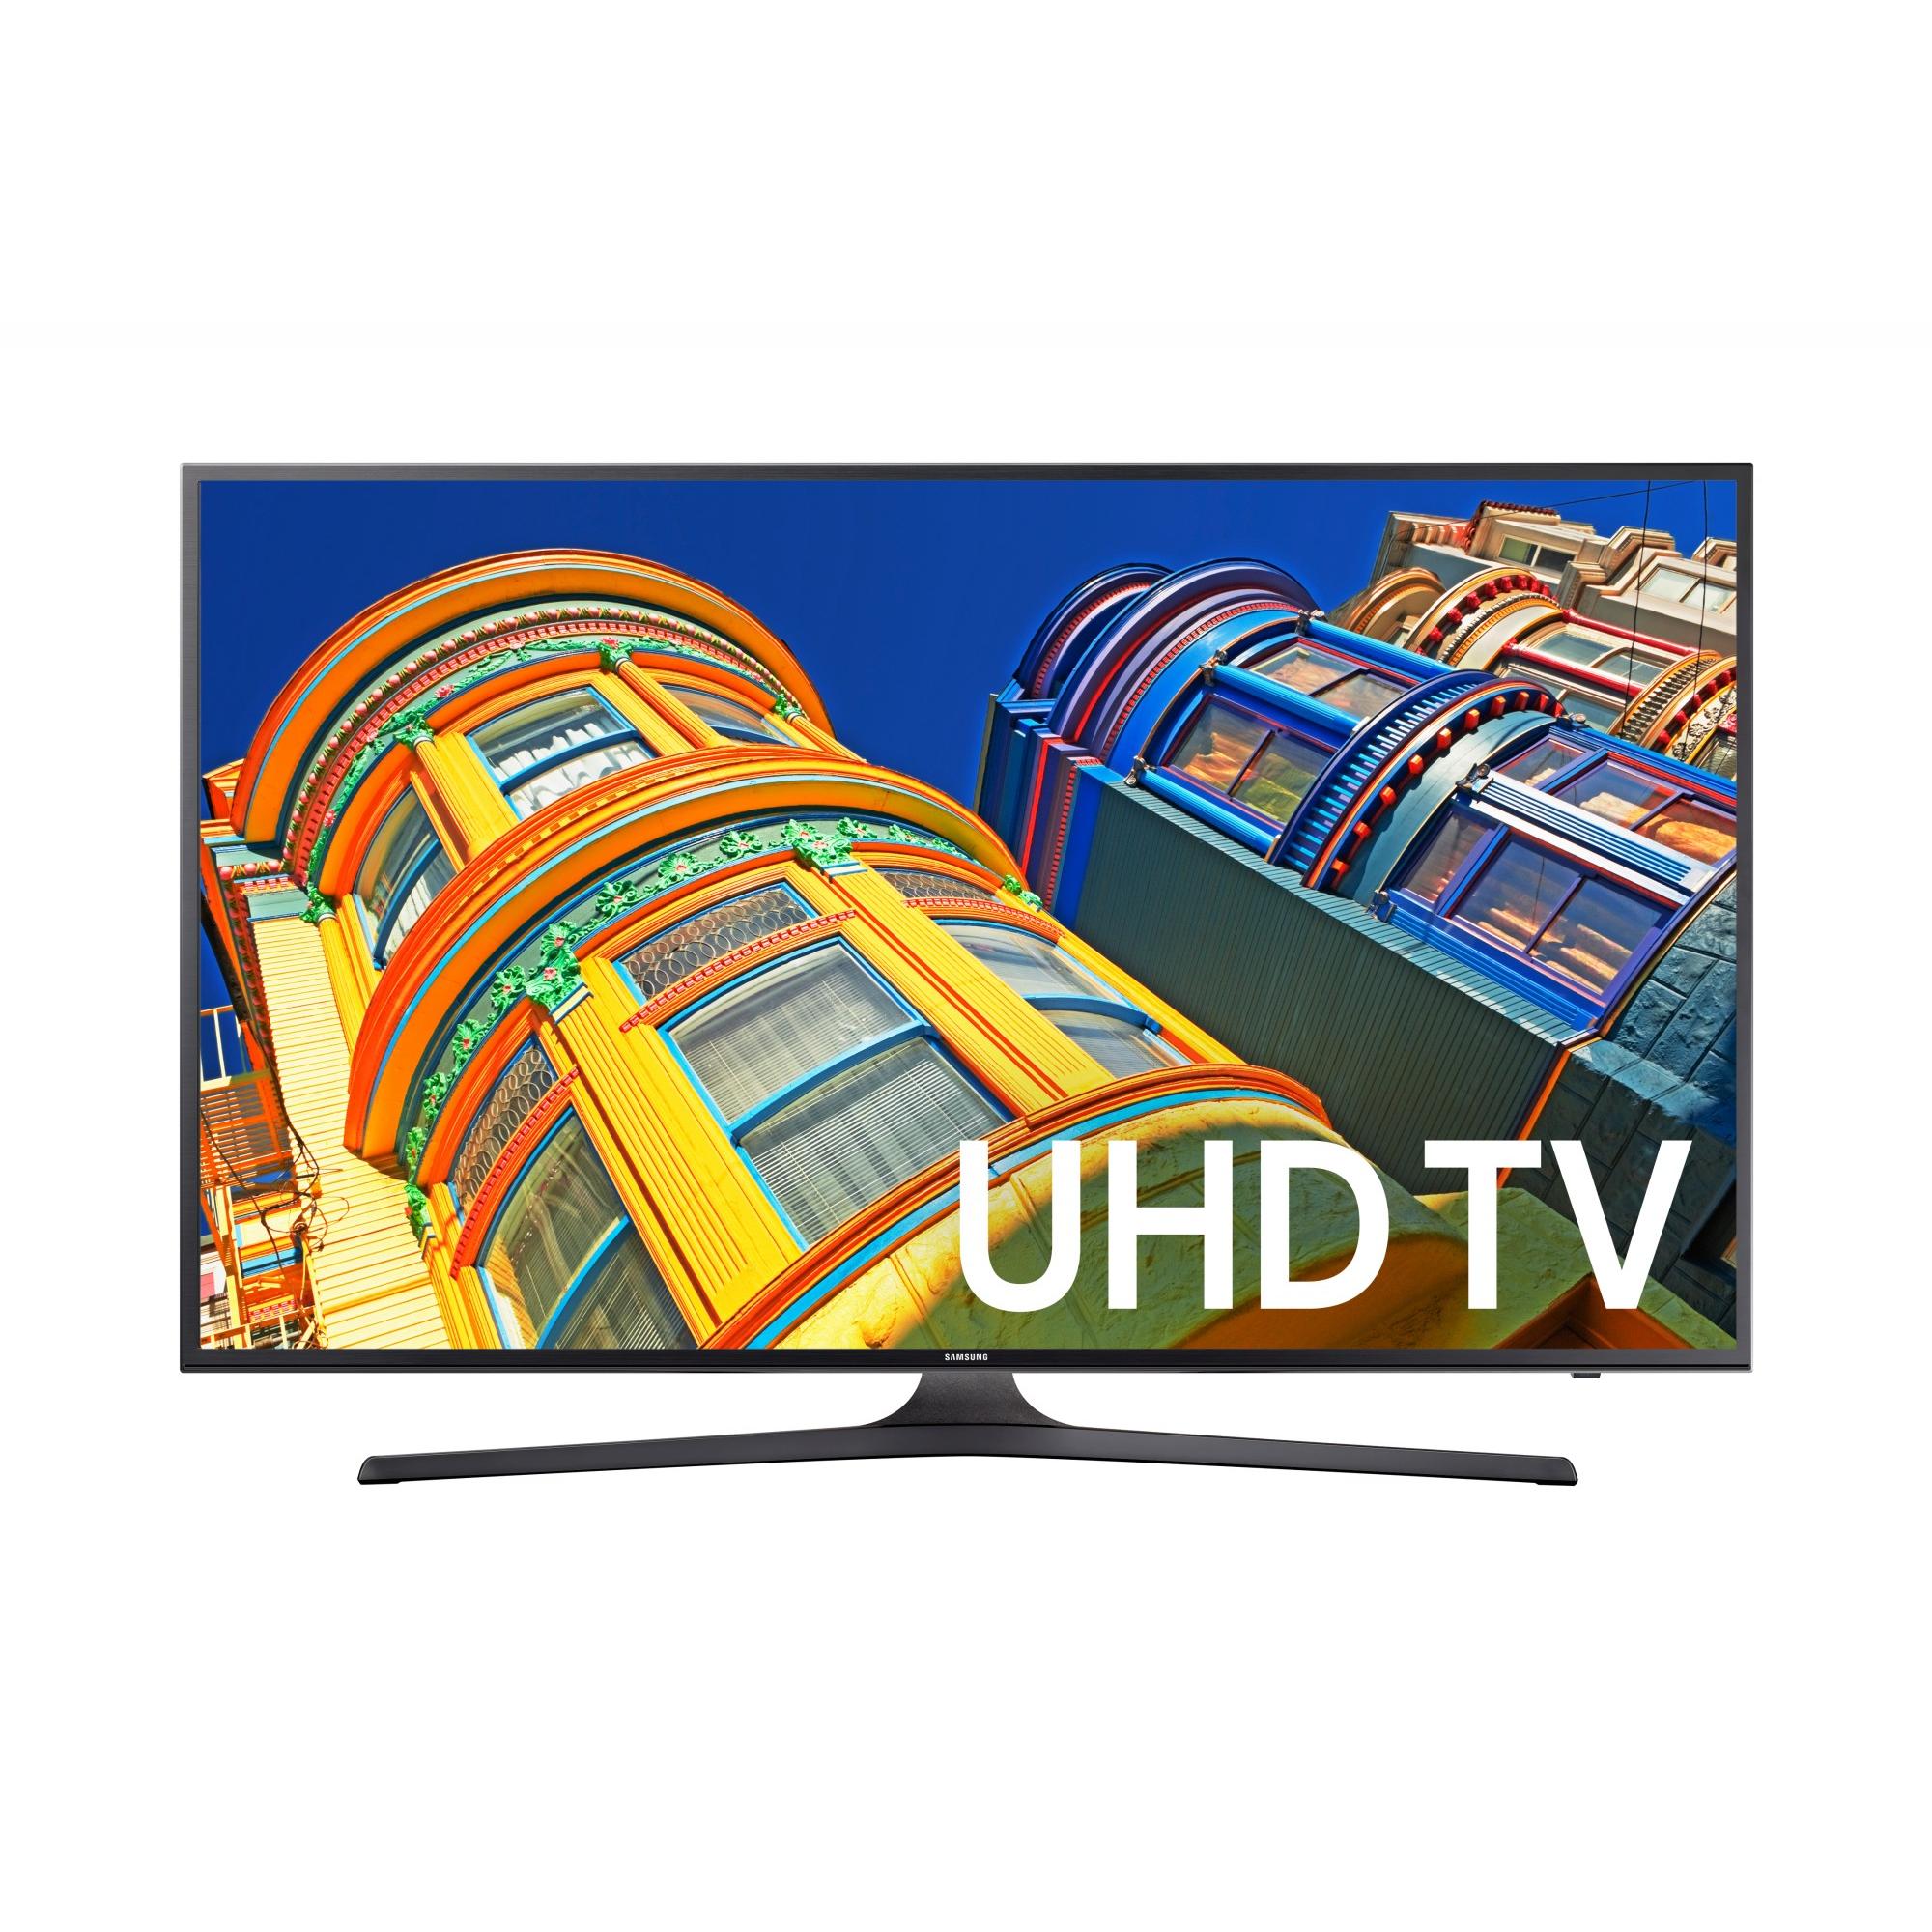 Samsung KU6300 6-Series 40" 4K UHD Slim FLED Smart TV - image 2 of 7